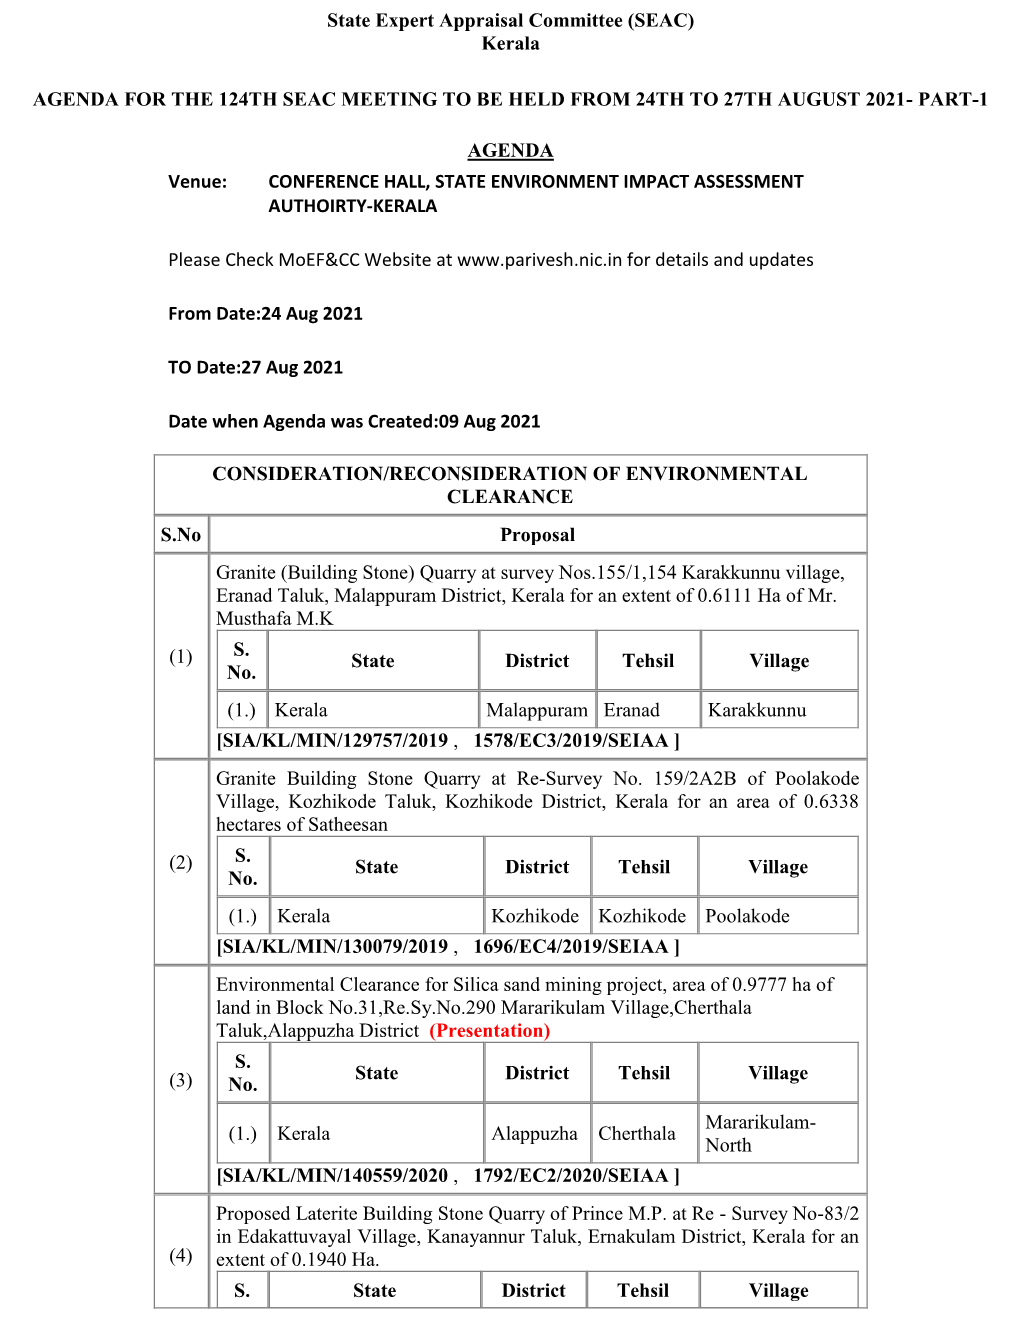 State Expert Appraisal Committee (SEAC) Kerala